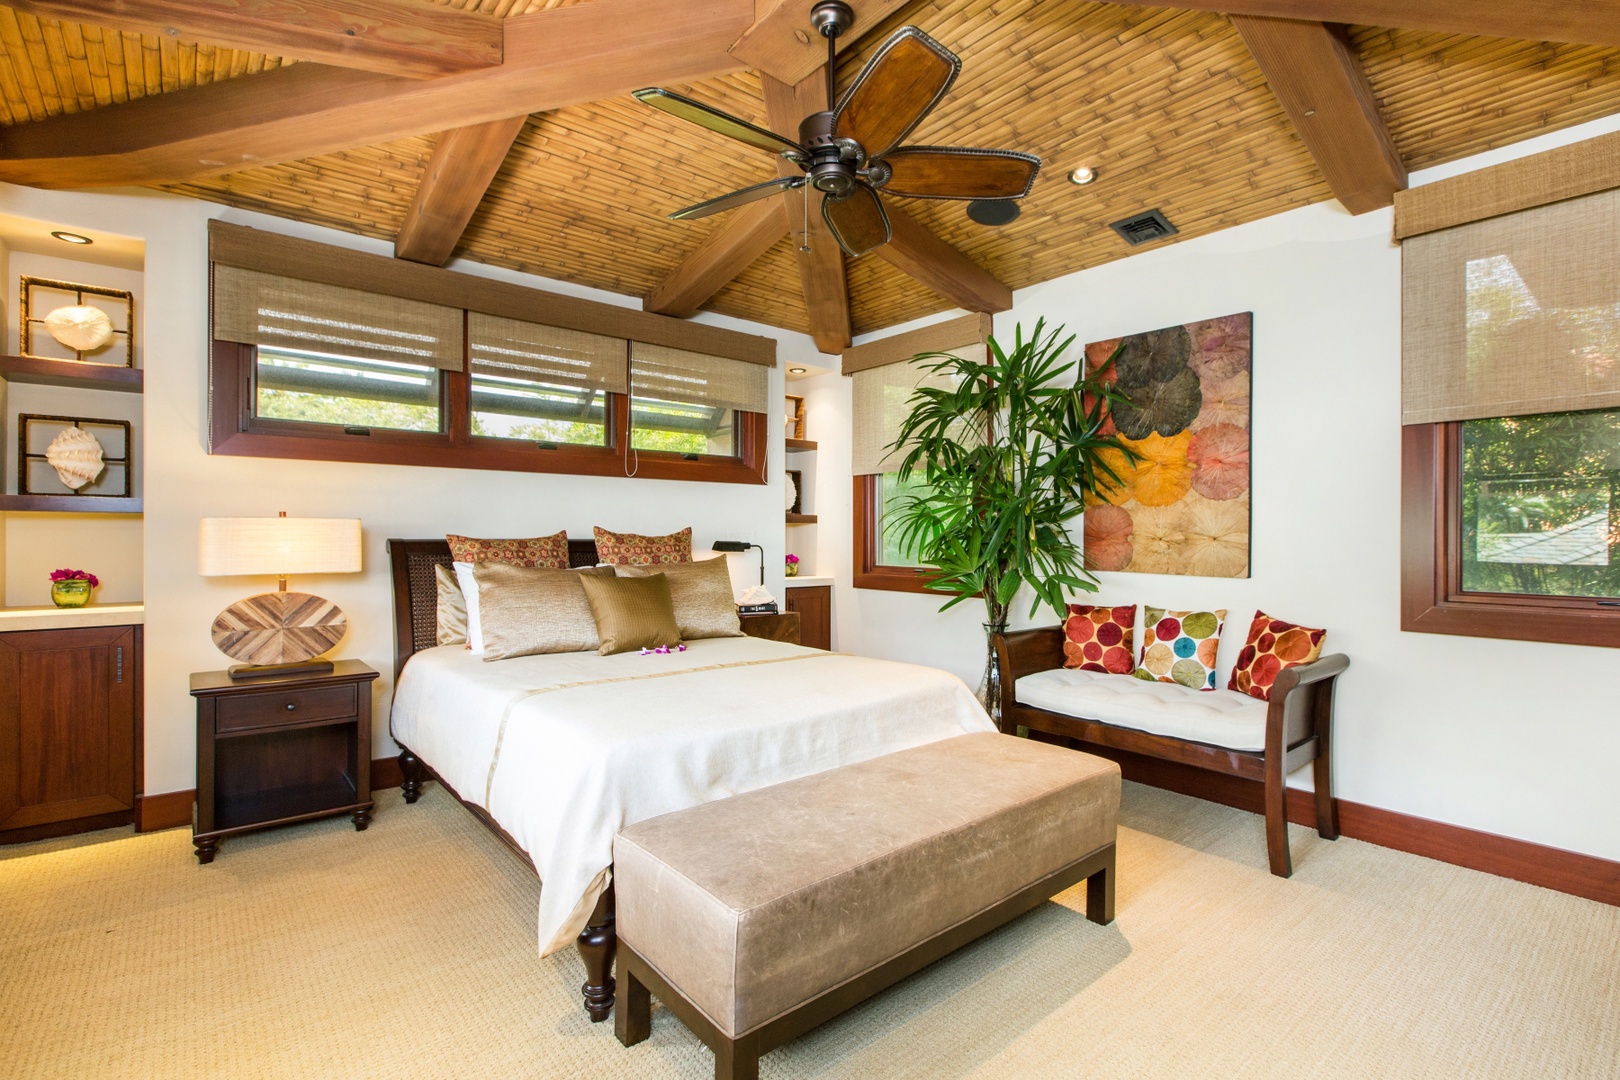 Honolulu Vacation Rentals, Banyan House 4 Bedroom - Upstairs Guest Room